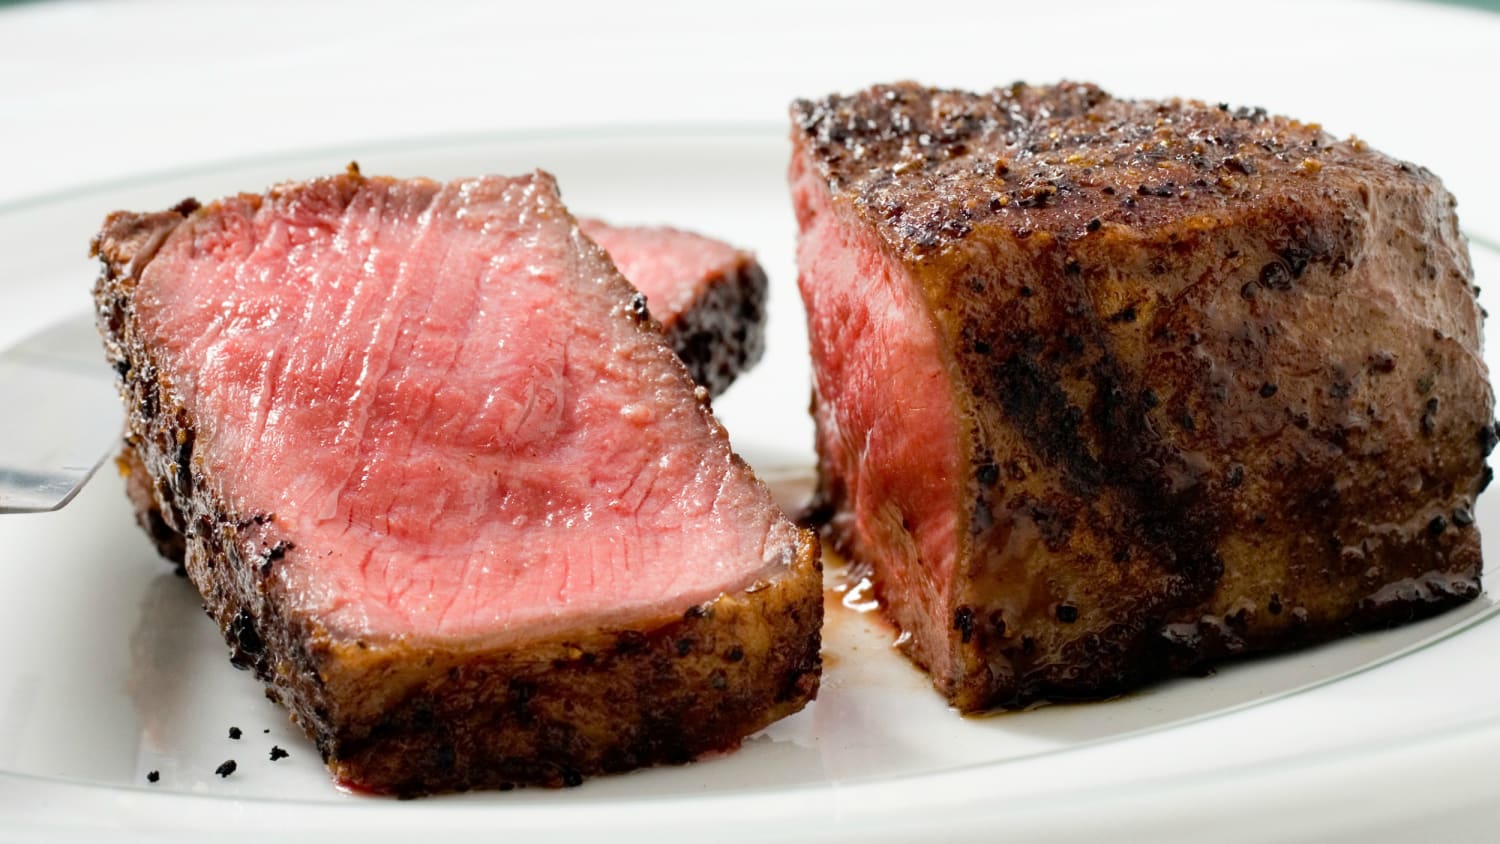 https://media-cldnry.s-nbcnews.com/image/upload/newscms/2016_01/925741/americas-test-kitchen-steak-today-150107-tease.jpg